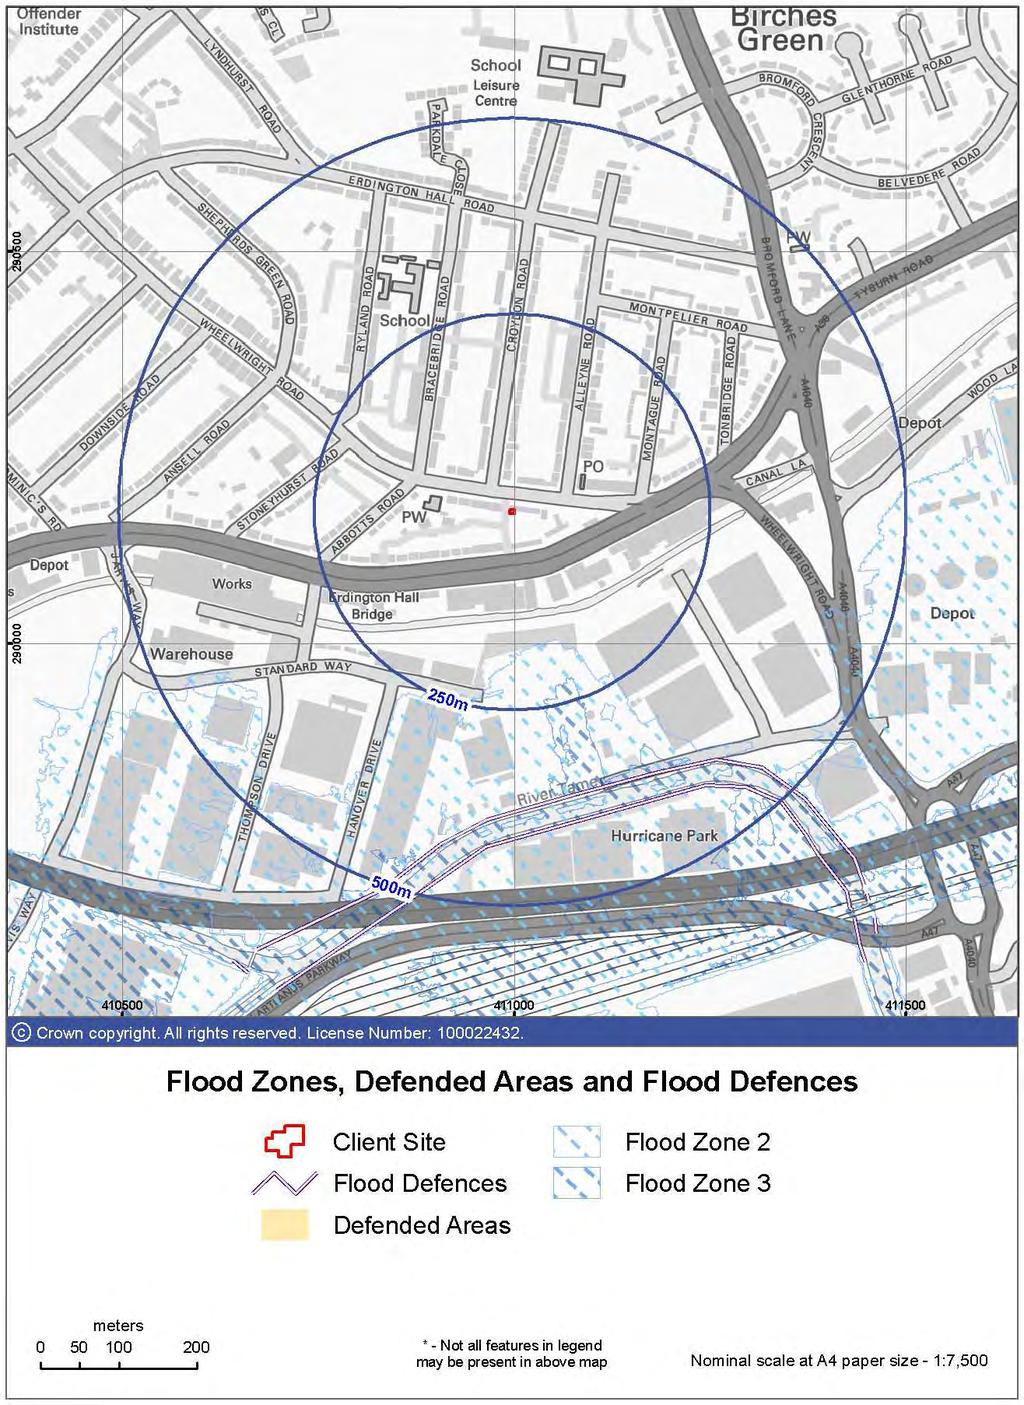 Section B River, Coastal Risk and Flood Defences